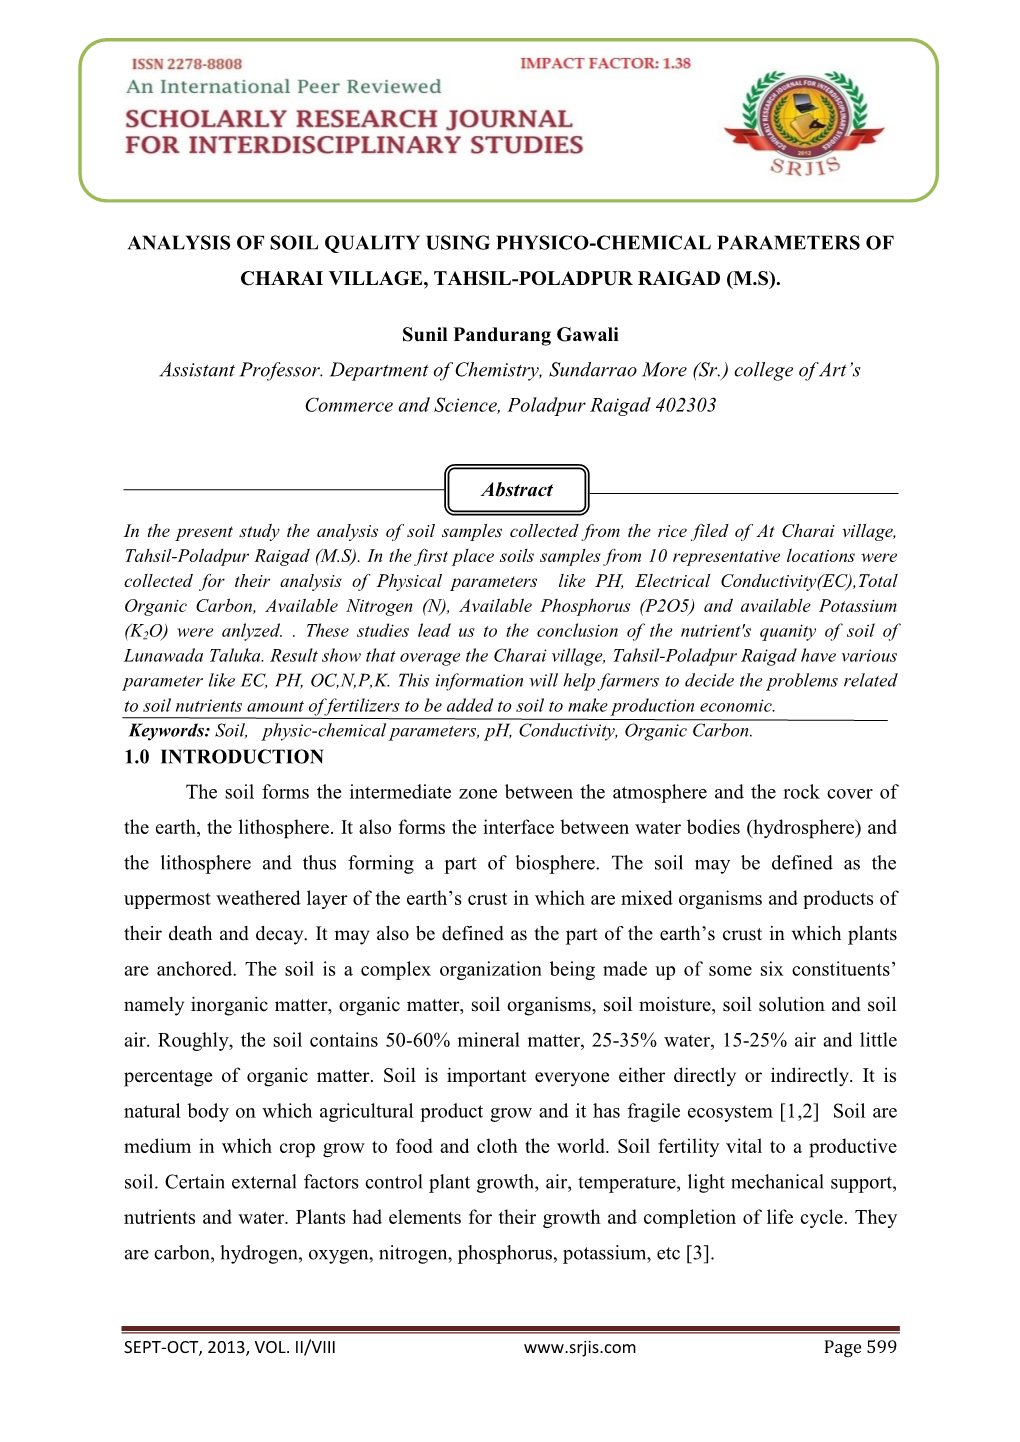 Analysis of Soil Quality Using Physico-Chemical Parameters of Charai Village, Tahsil-Poladpur Raigad (M.S)